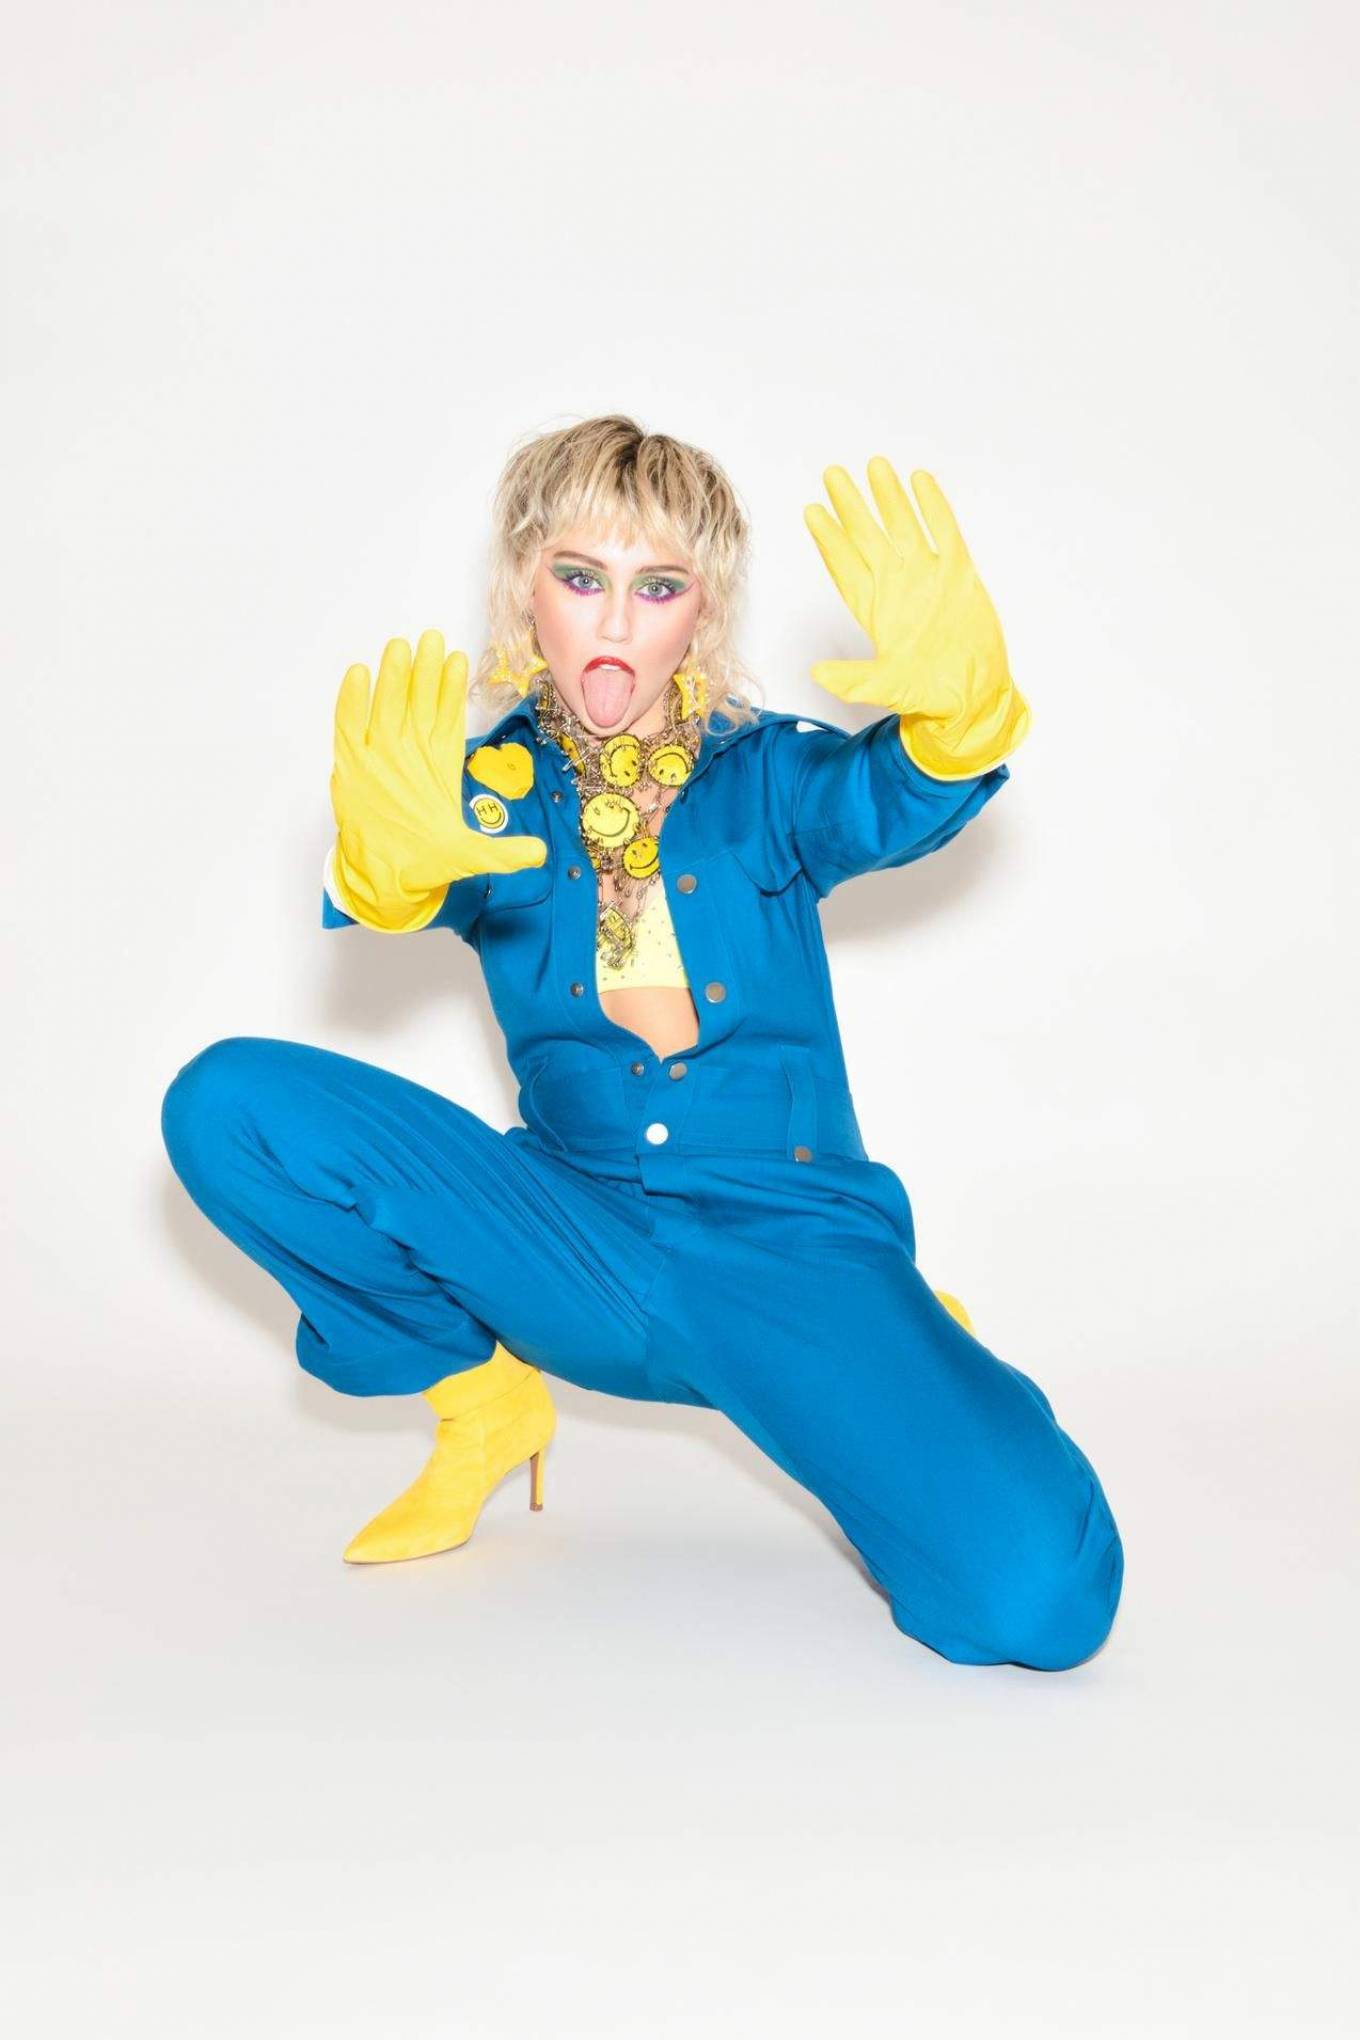 Miley Cyrus 2020 : Miley Cyrus – Wall Street Journal Magazine 2020-05